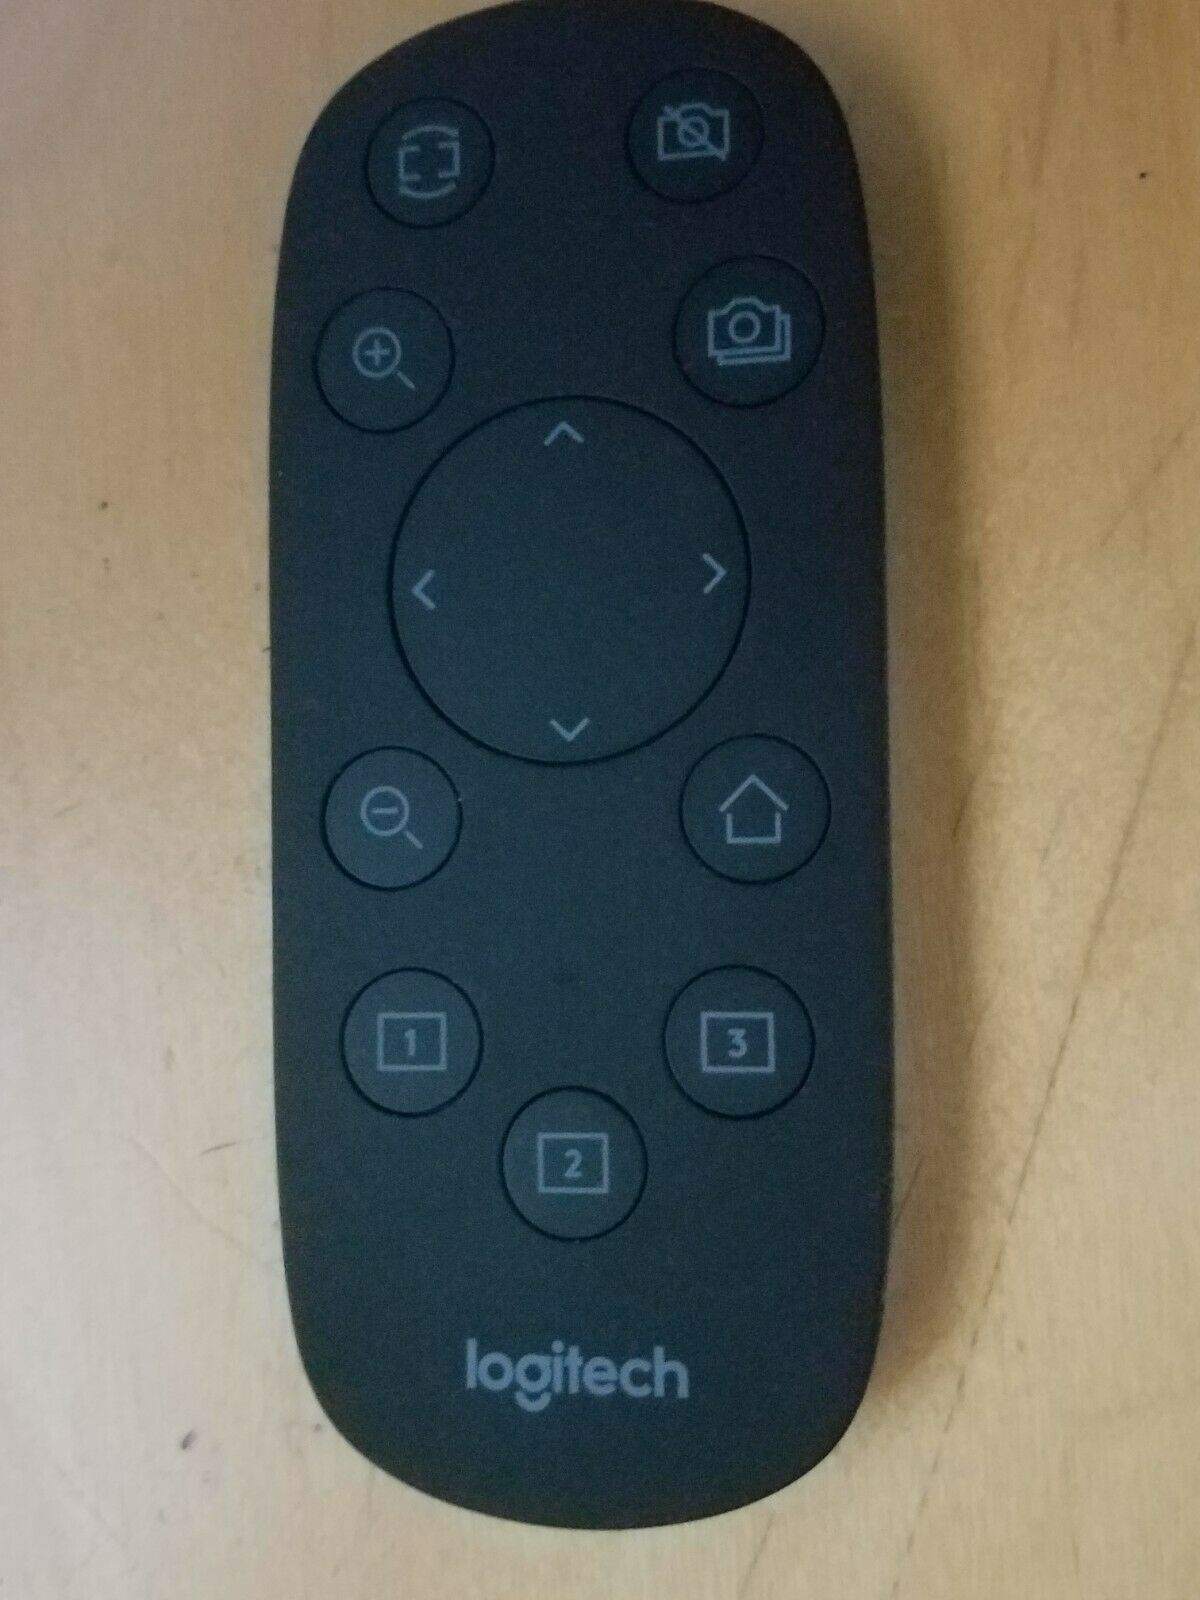 Logitech Remote Control For Ptz Pro 2 Conference Webcam